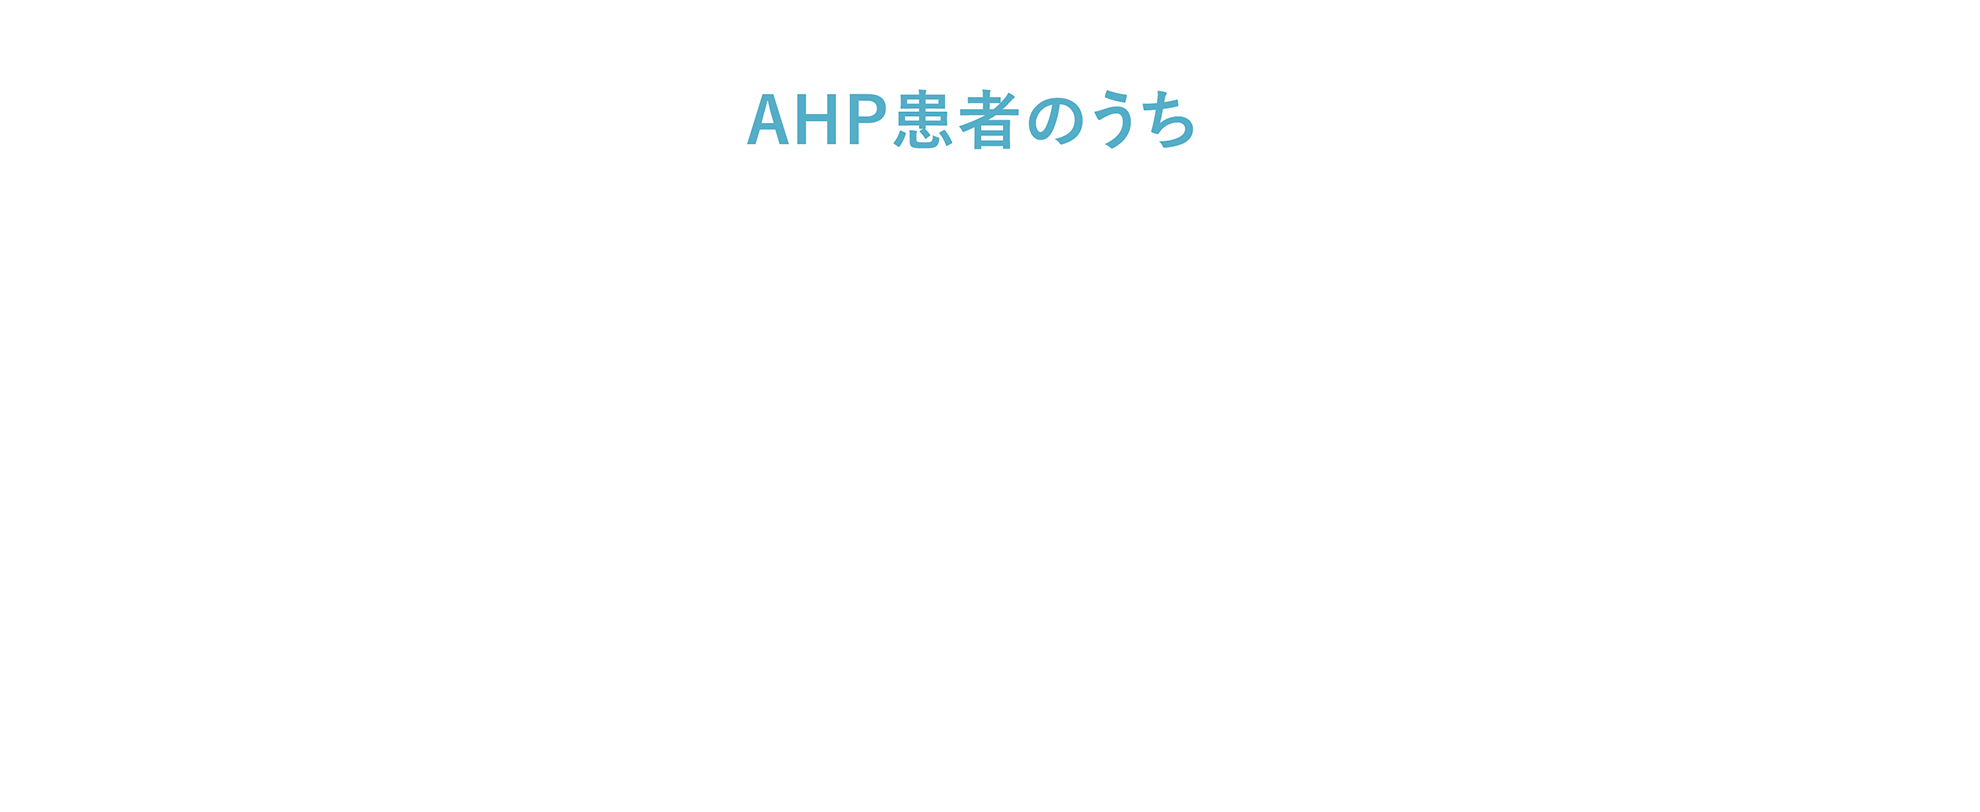 AHP患者のうち女性が占める割合80%、男性が占める割合20%